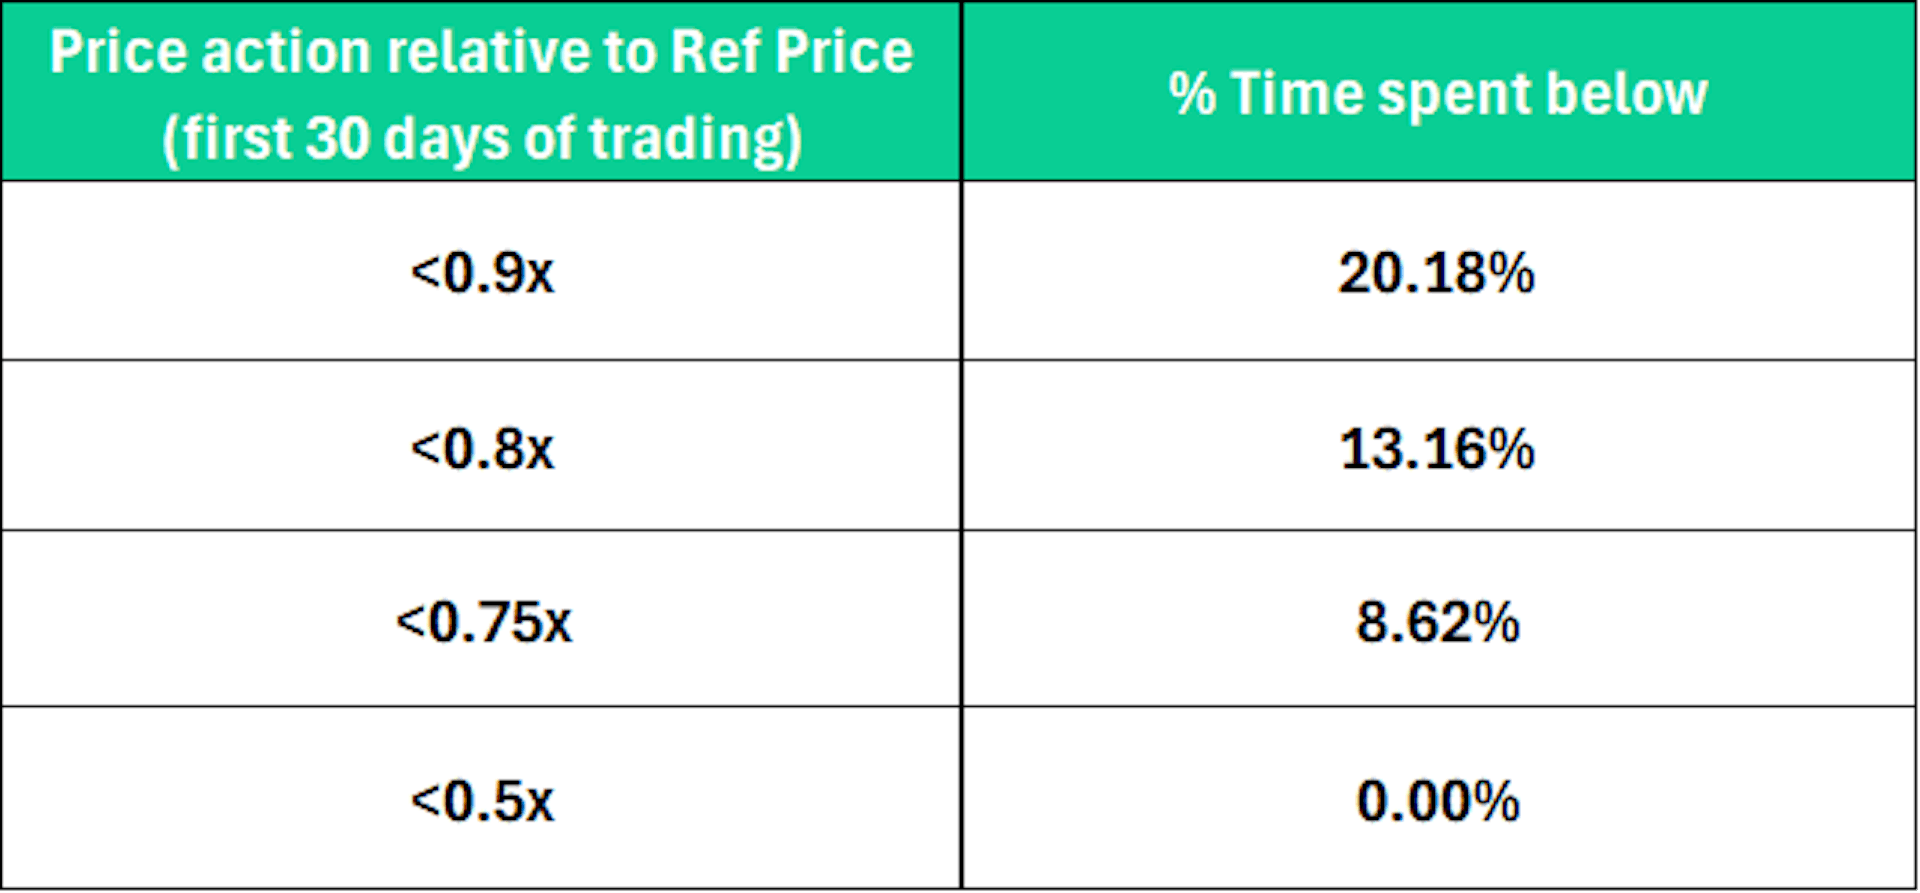 Price action relative to ref price